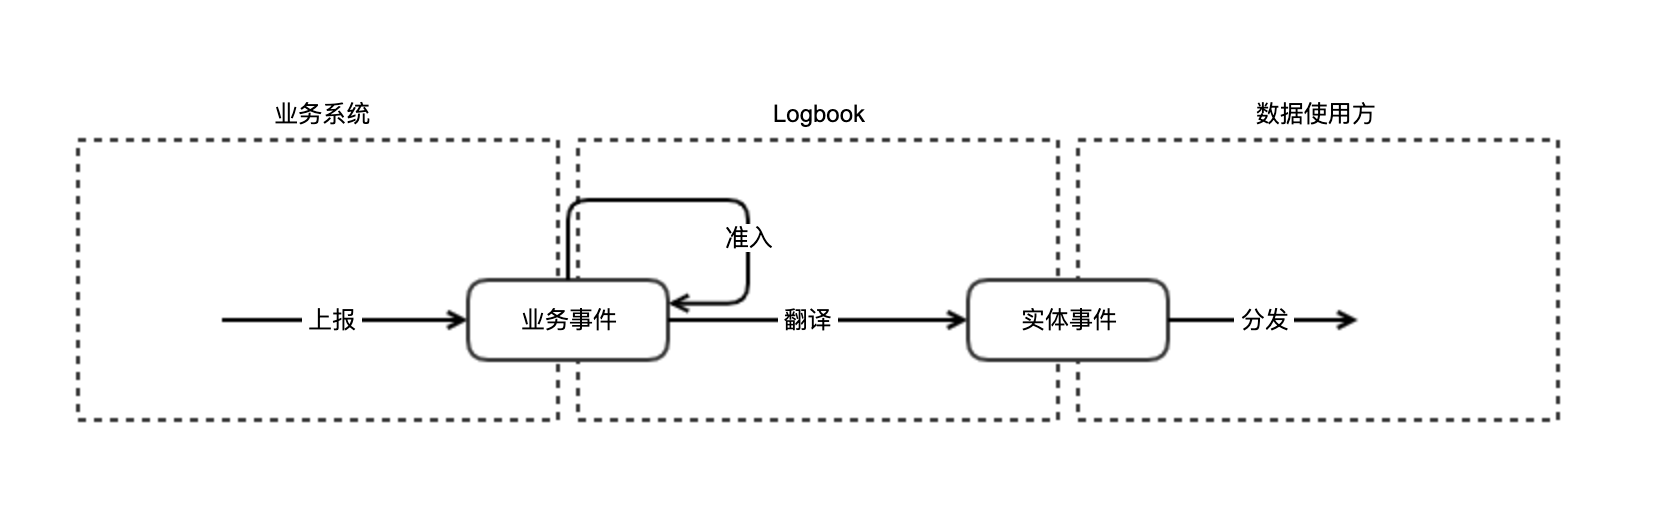 logbook架构简图